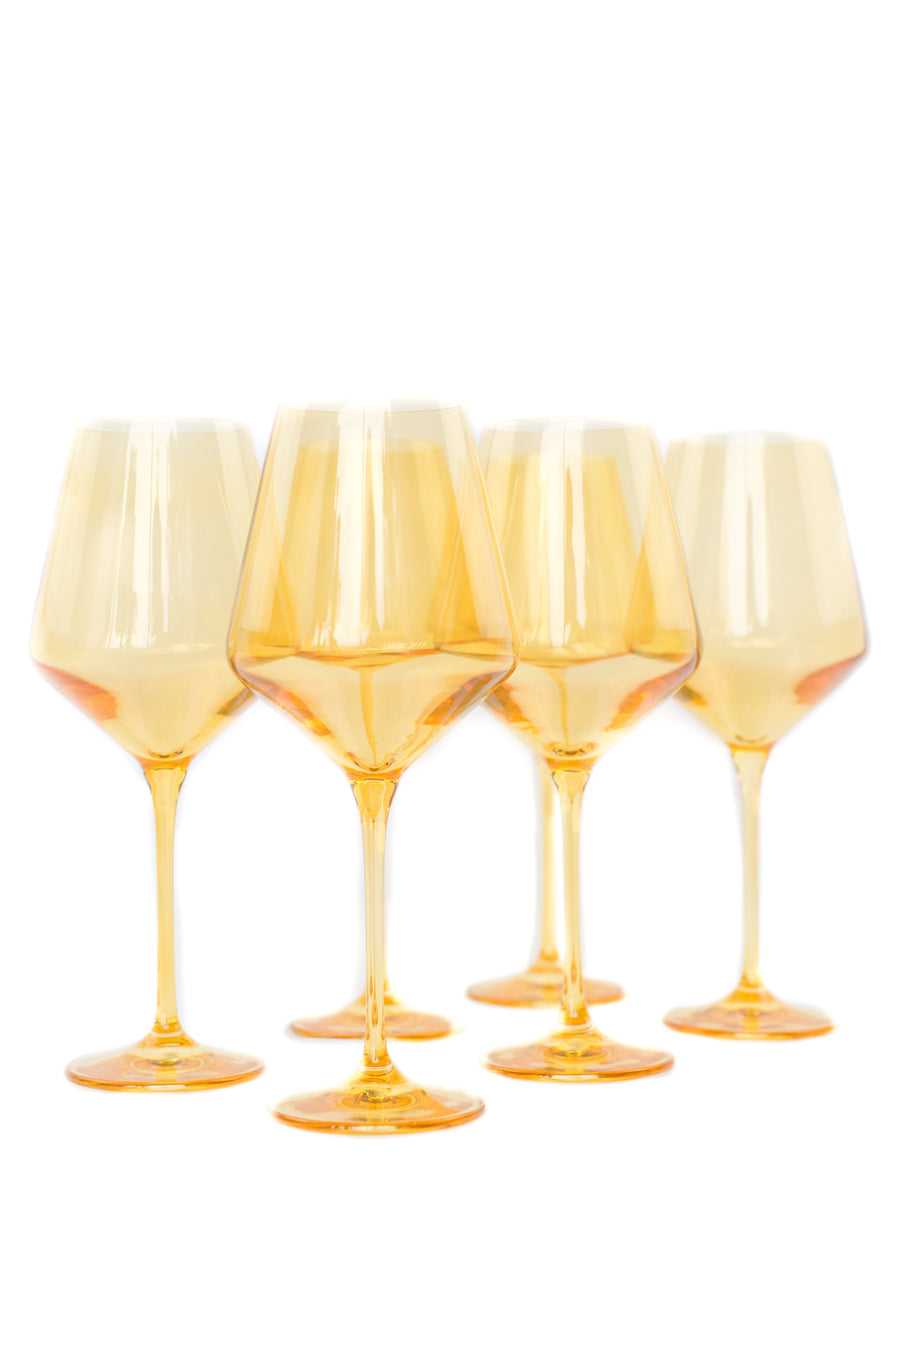 Stemware Wine Glasses - Set of 6